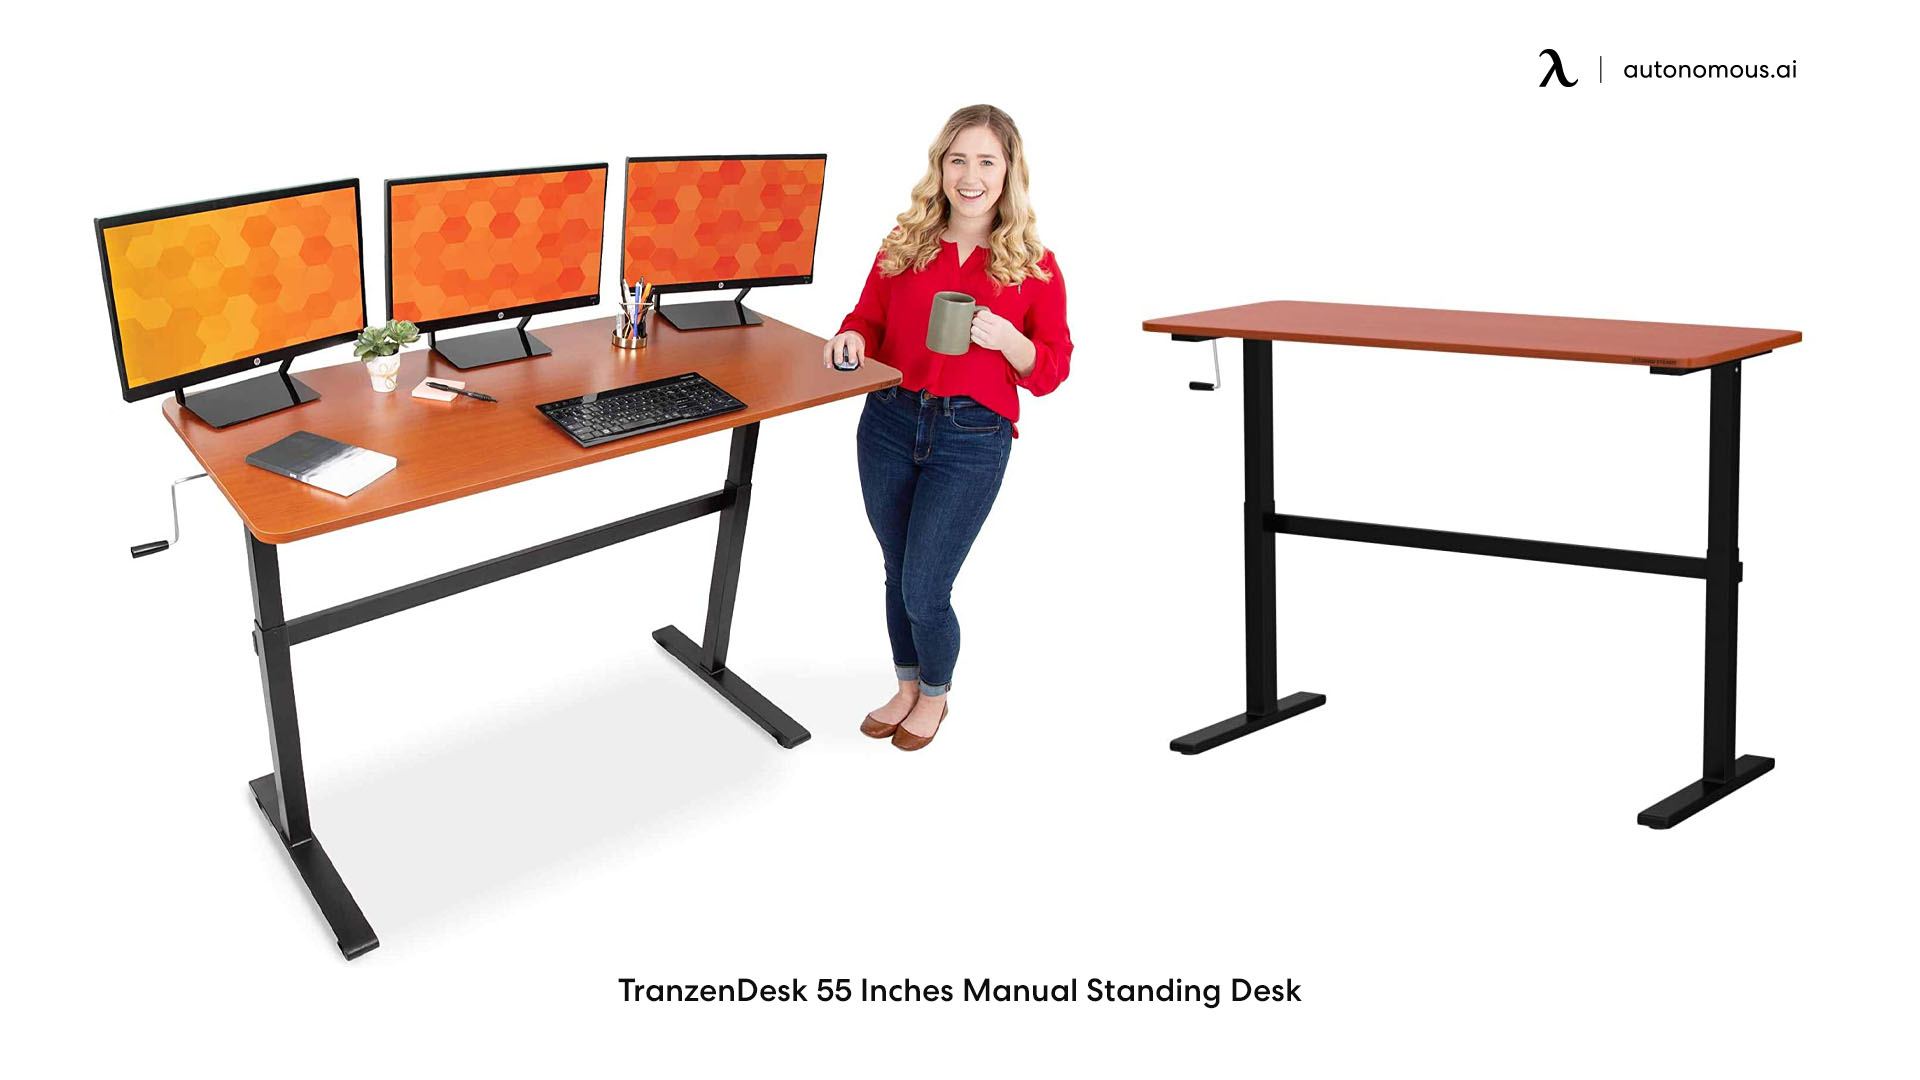 TranzenDesk 55 Inches Manual Standing Desk